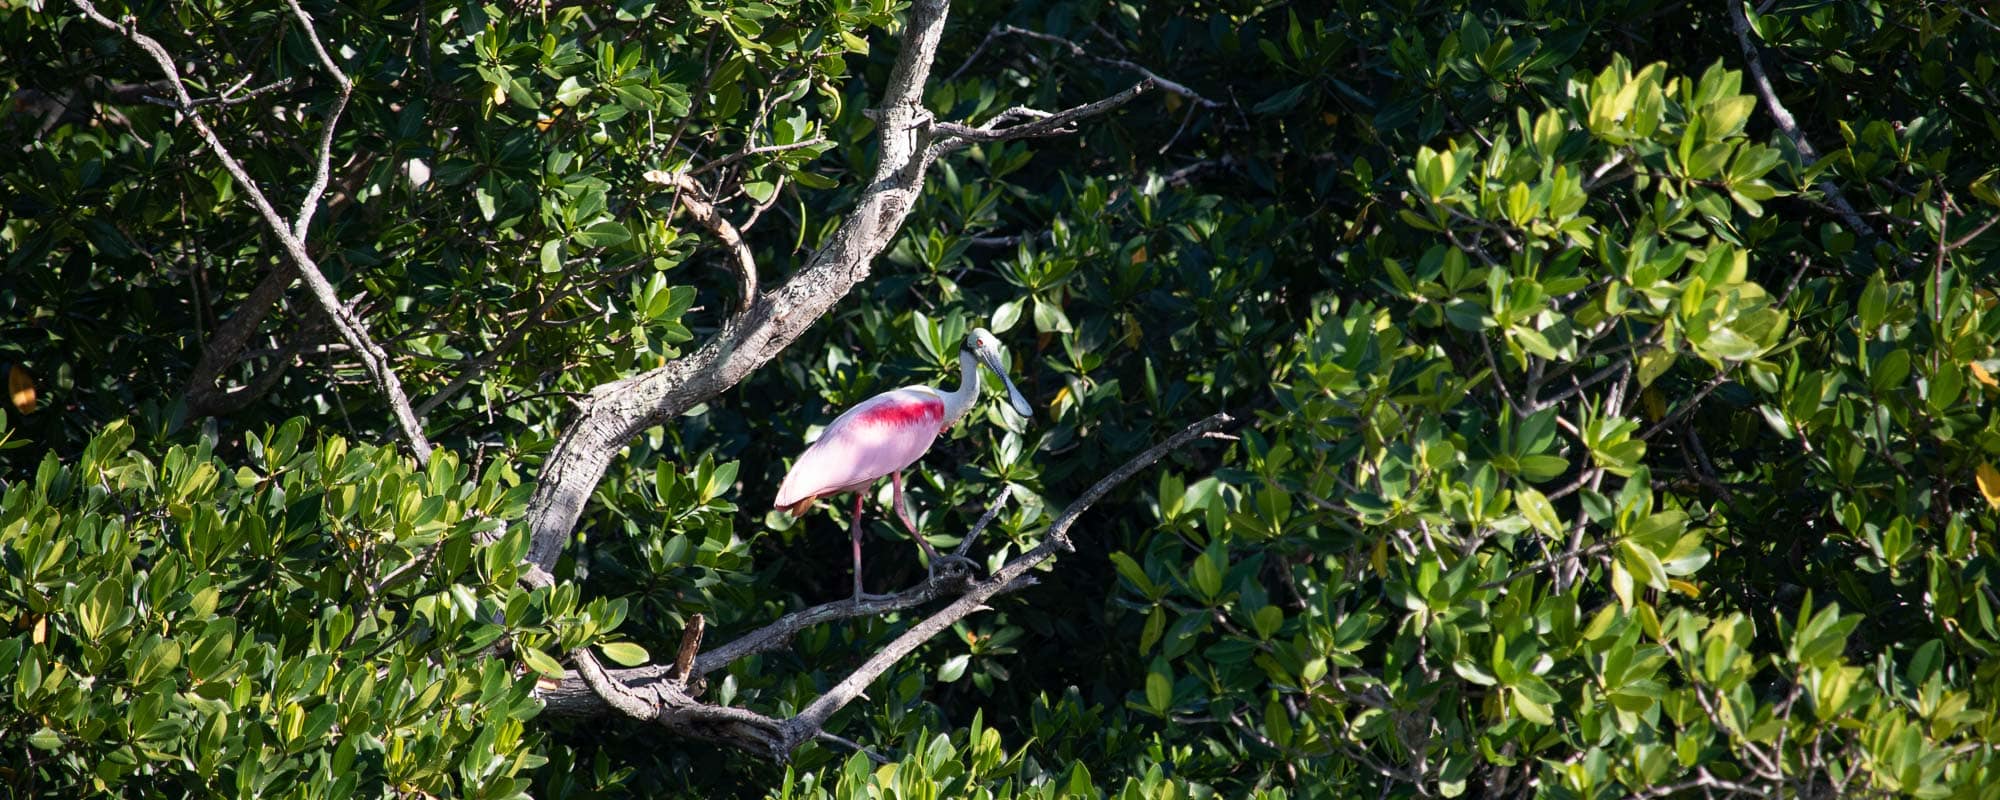 Everglades National Park - Roseate spoonbill